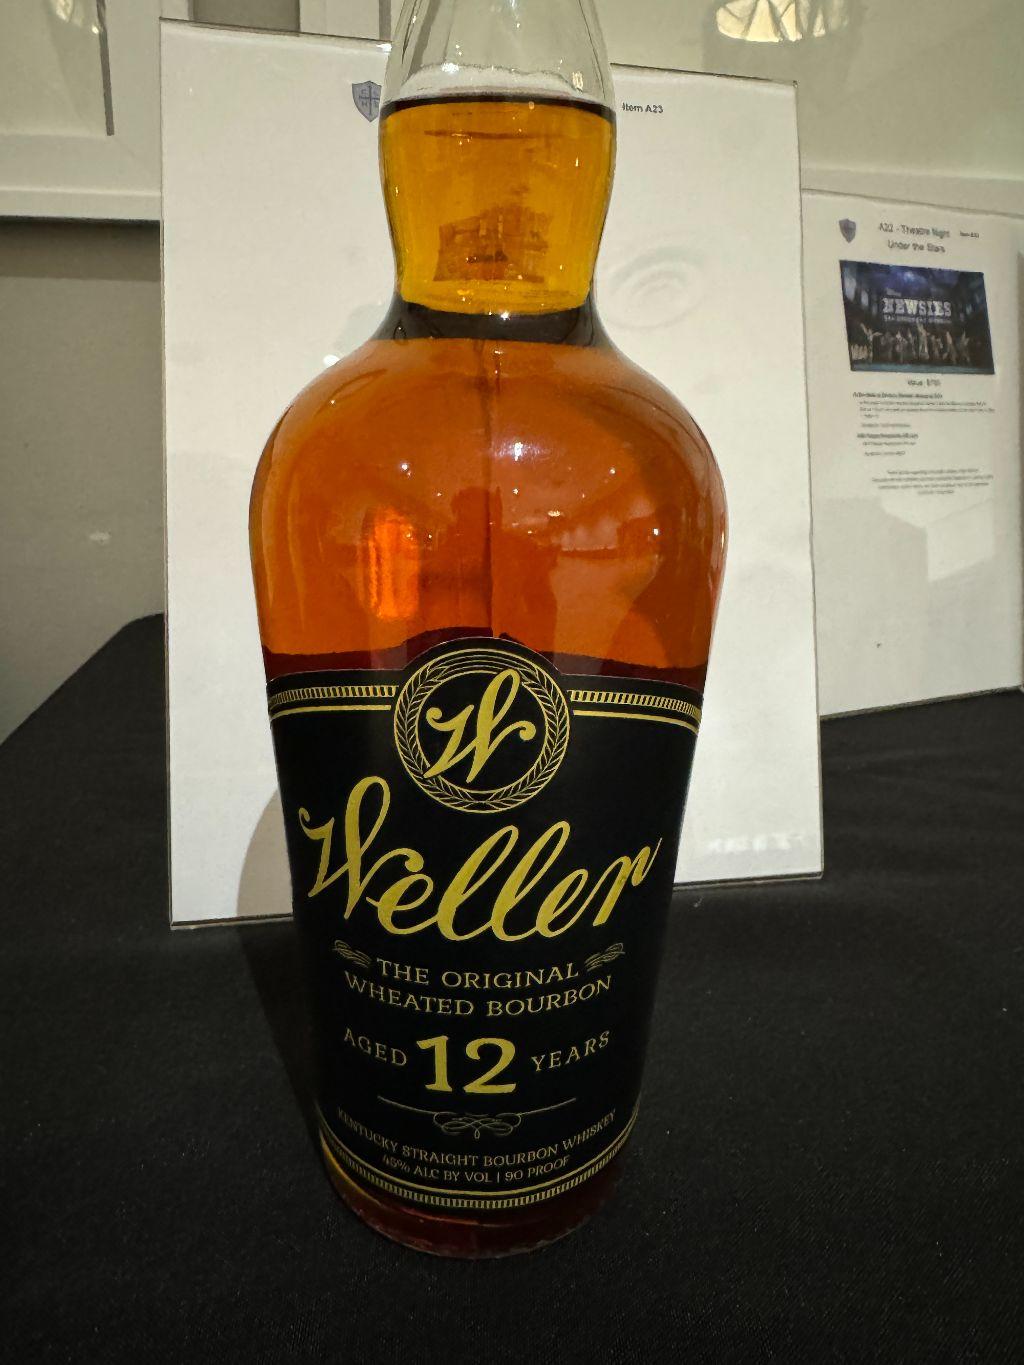 A23 - Weller Wheated Bourbon